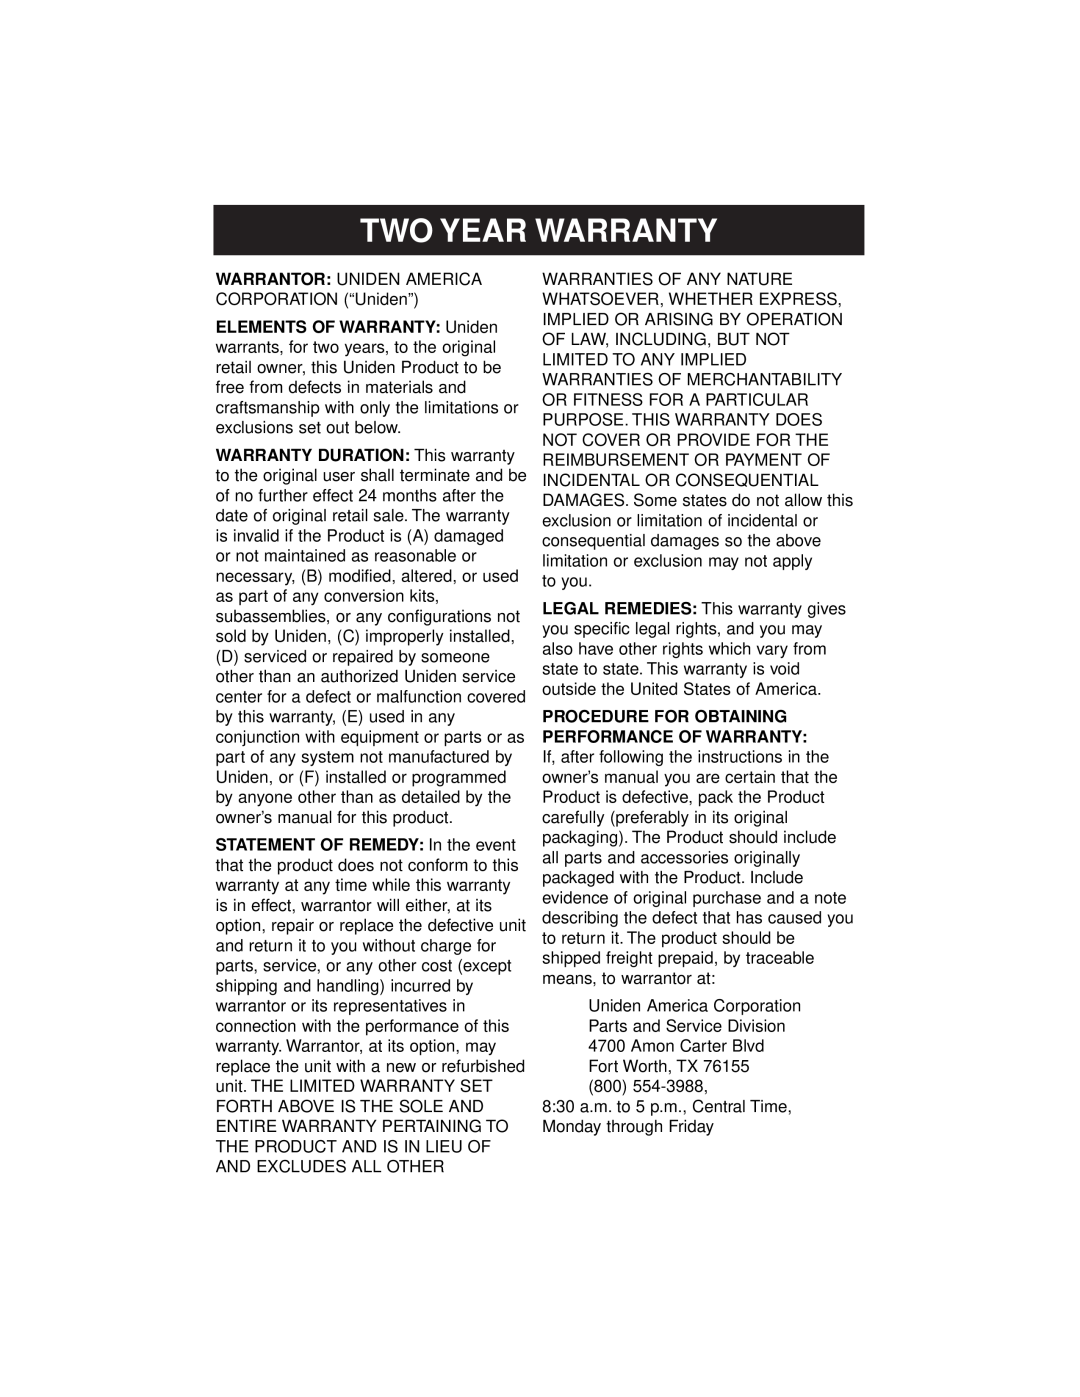 Uniden PRO 510XL manual Two Year Warranty 